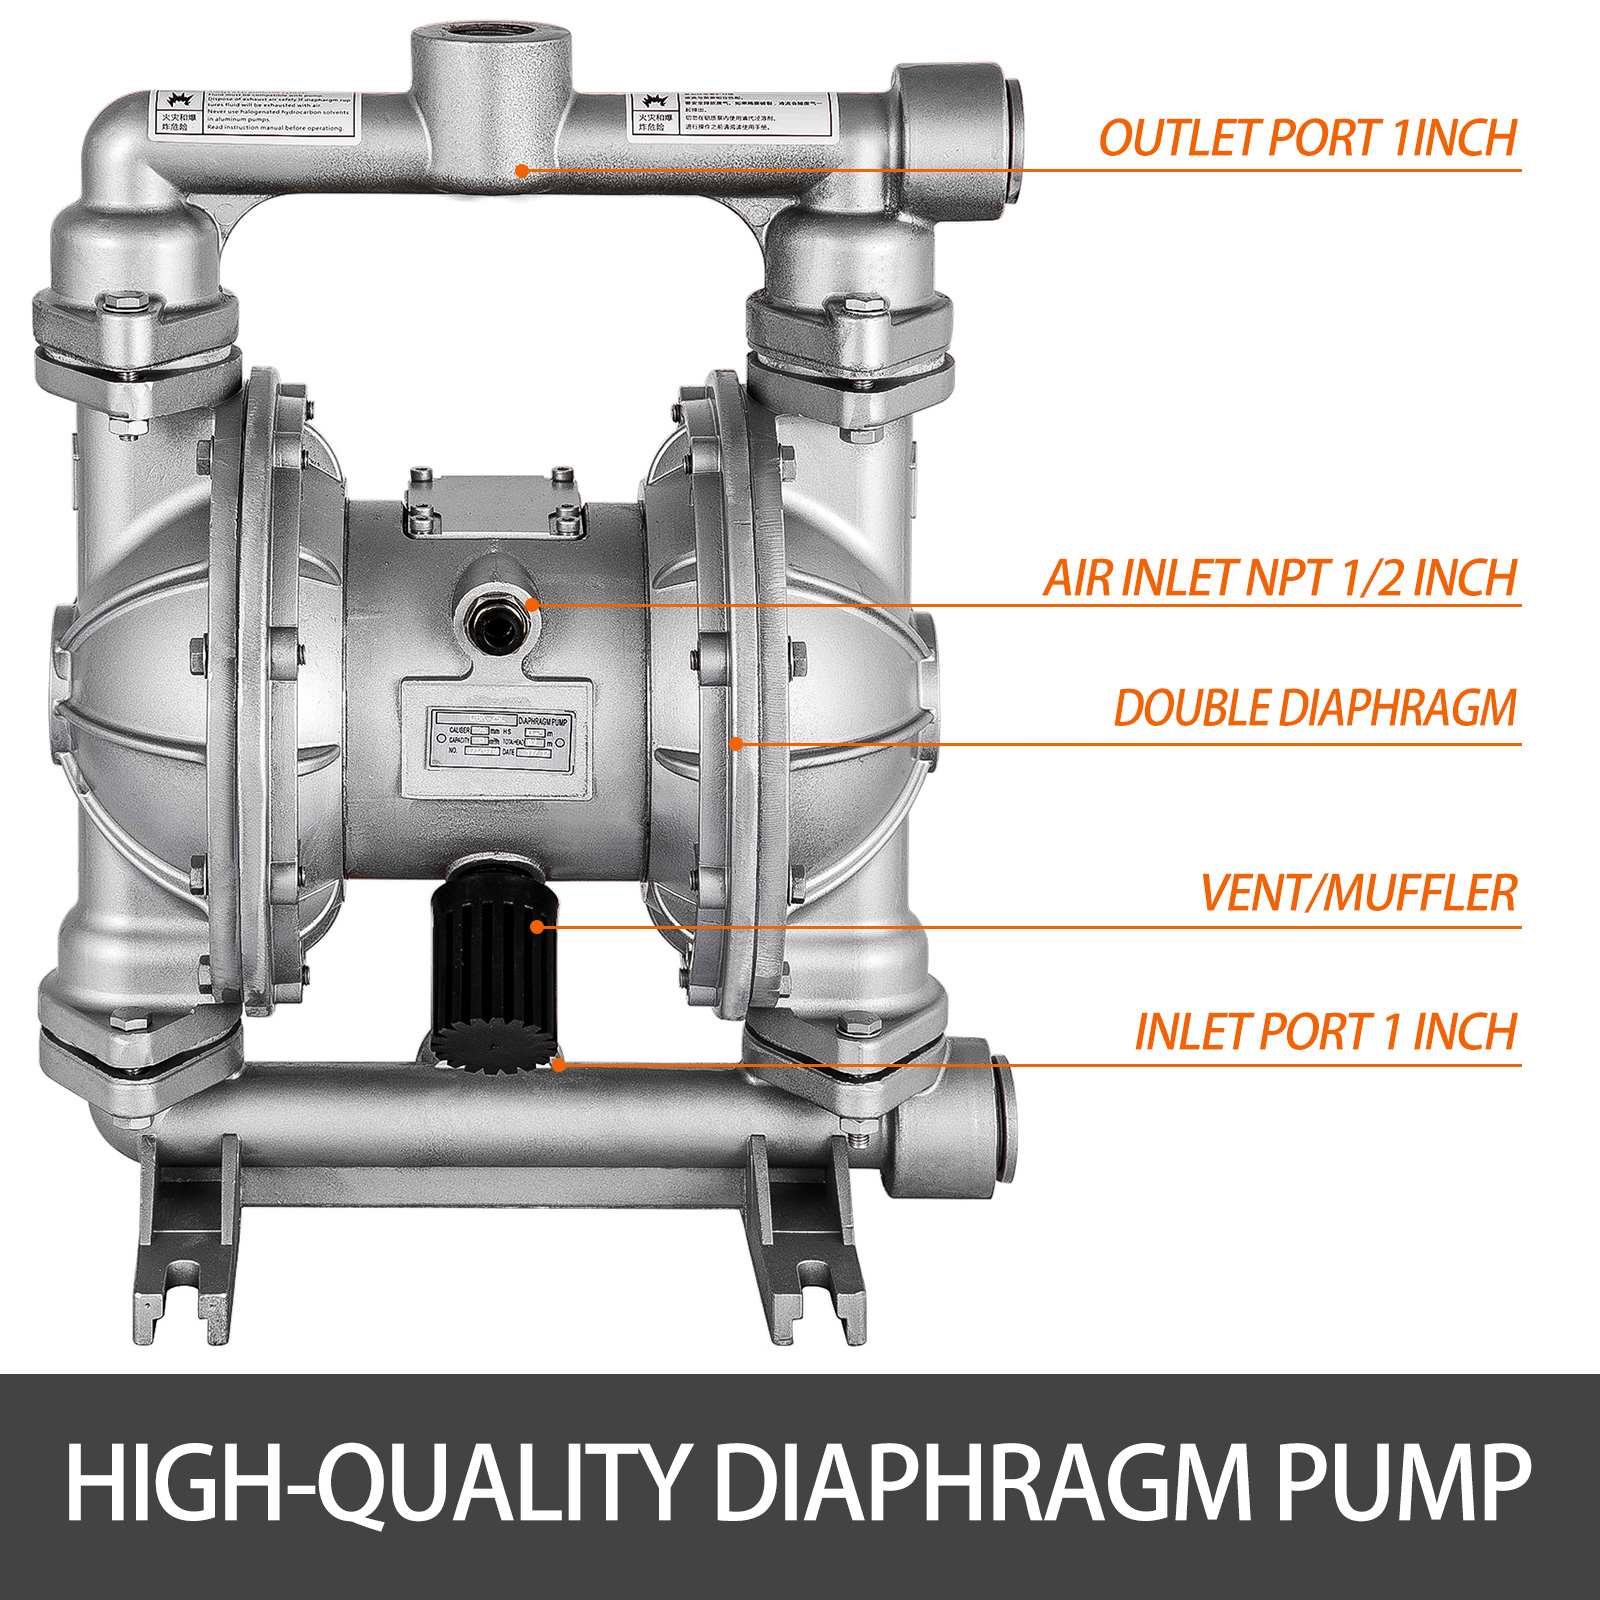 Details about   44GPM Air Operated Double Diaphragm Pump Petroleum Fluids 1-1/2" Inlet & Outlet